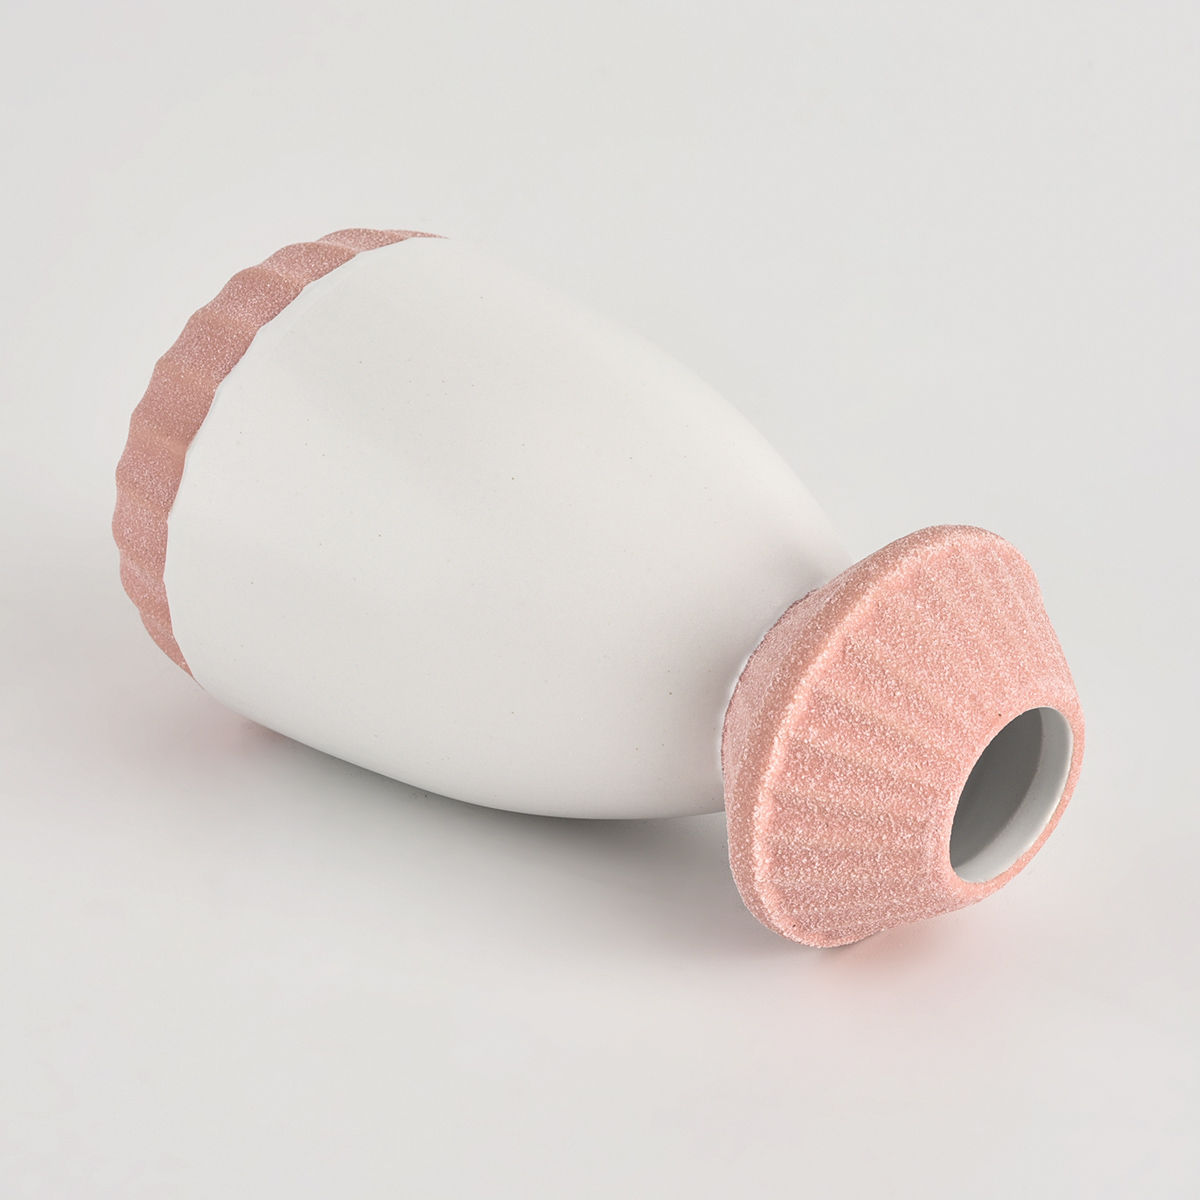 200ml unique ceramic diffuser bottles for home fragrance